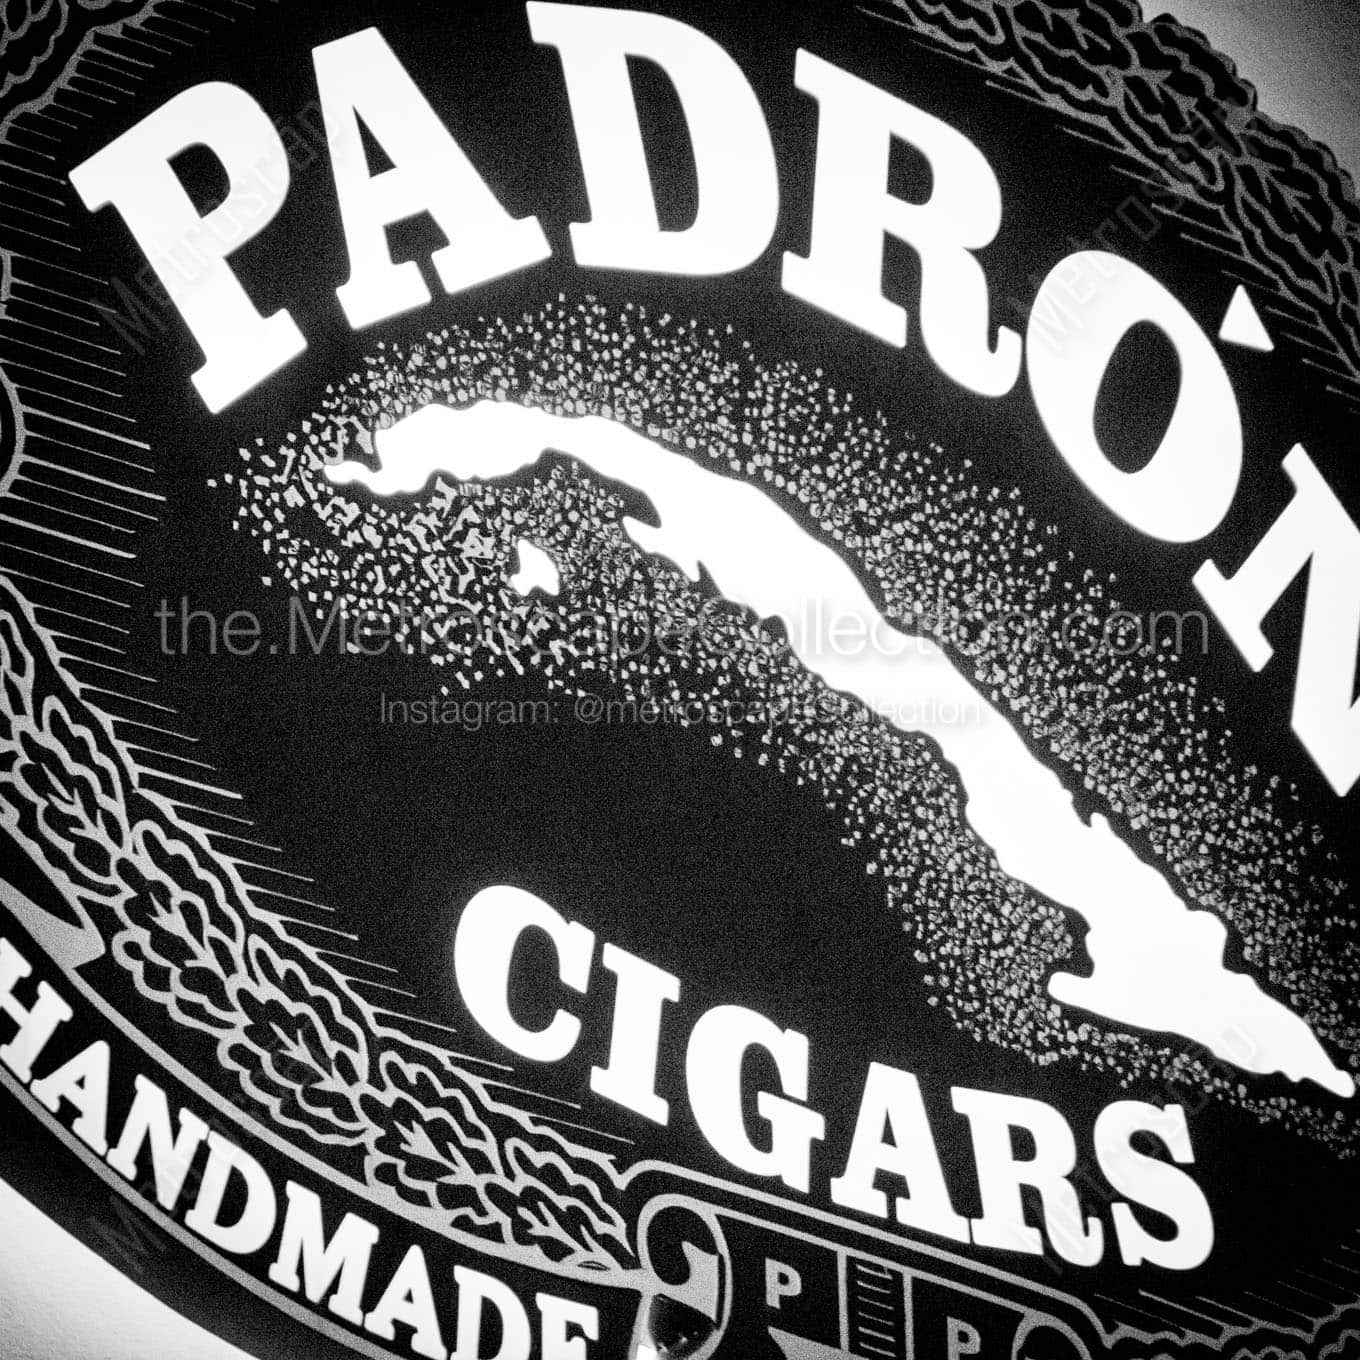 padron handmade cigars Black & White Wall Art